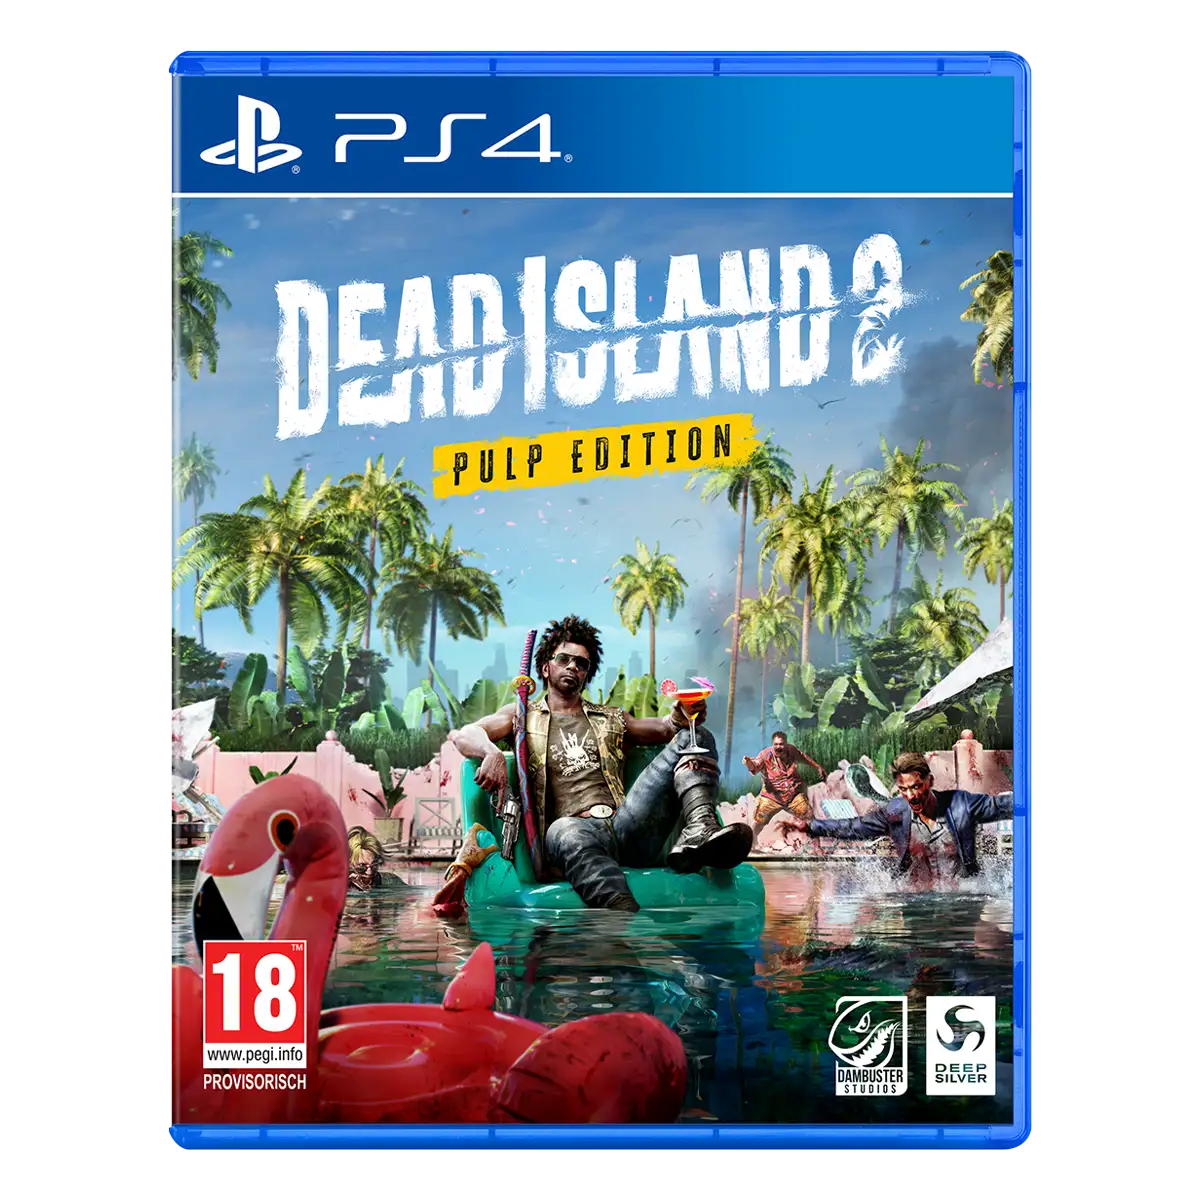 Dead Island 2 PULP Edition (PS4)